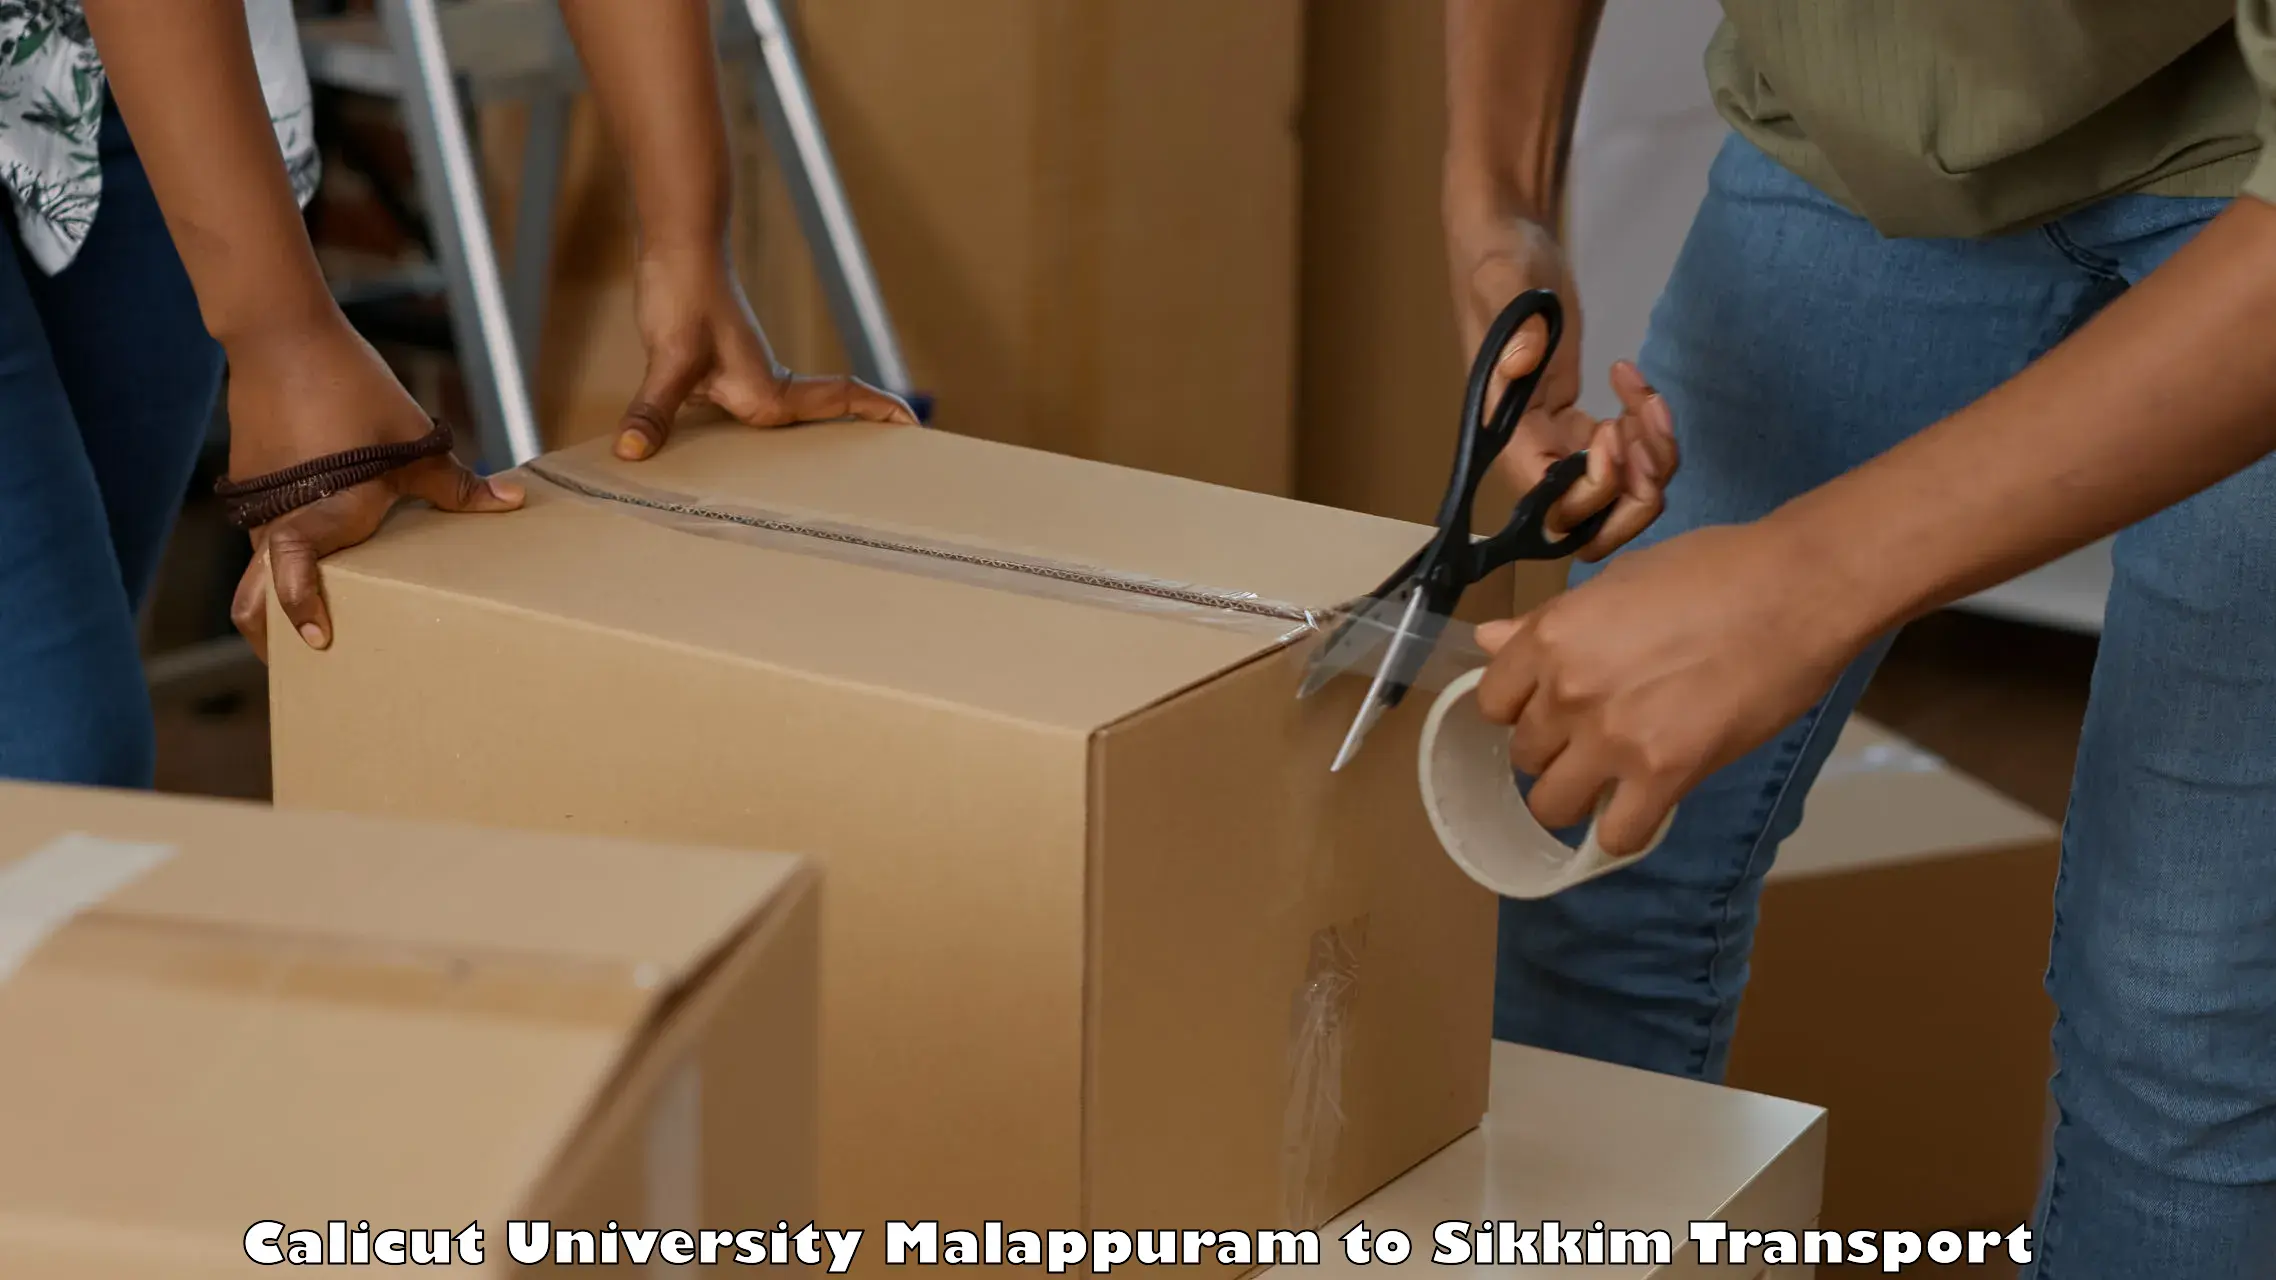 Luggage transport services Calicut University Malappuram to Mangan